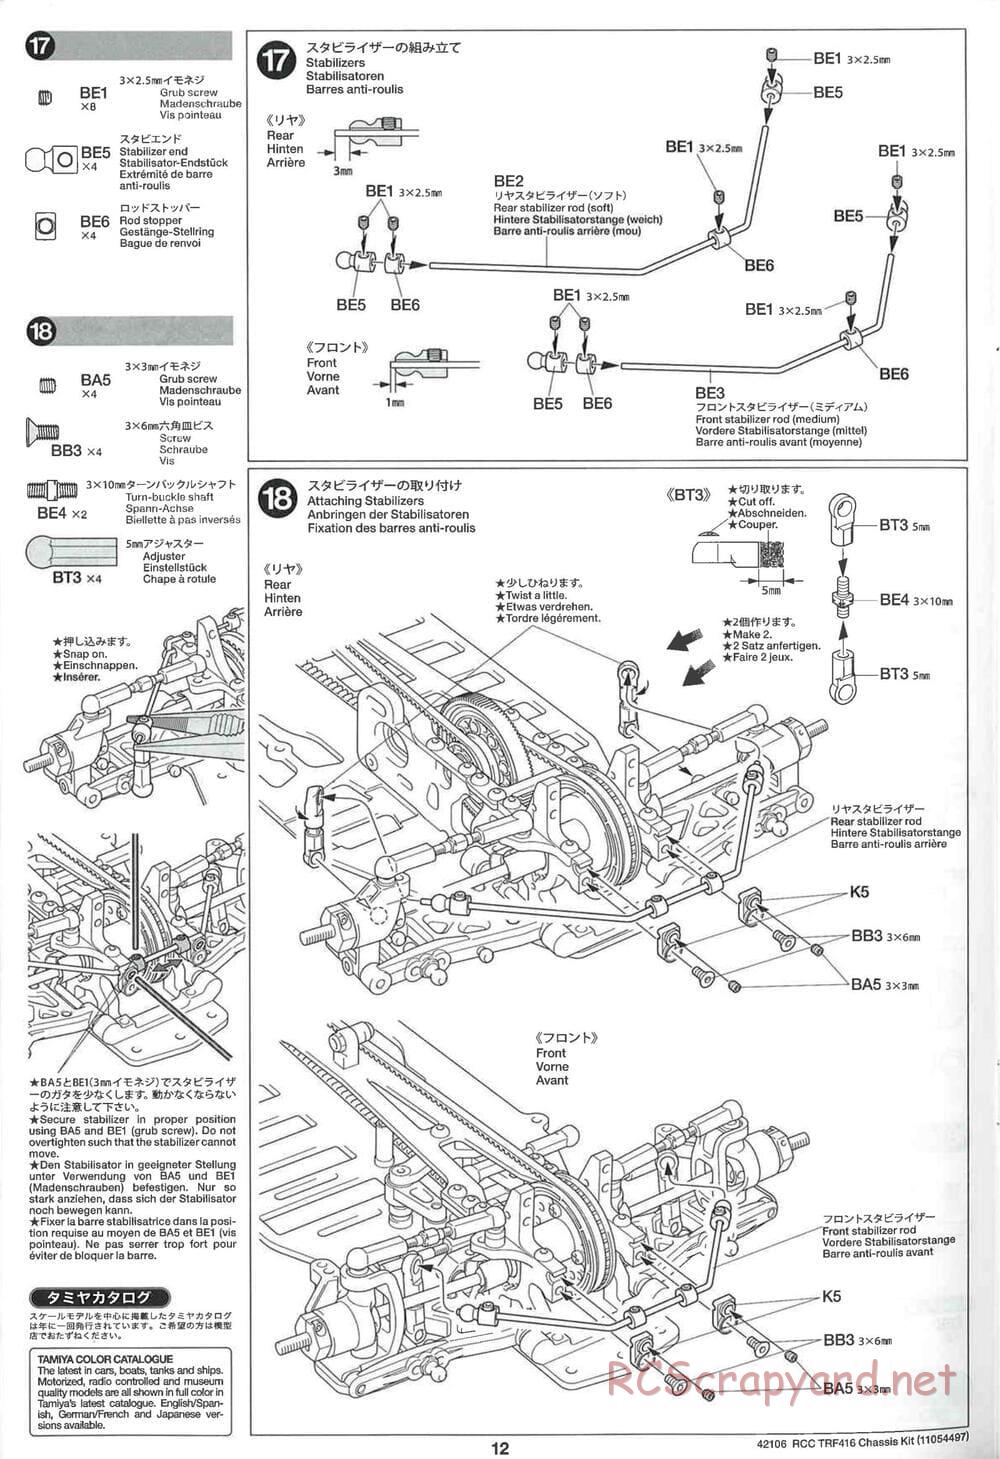 Tamiya - TRF416 Chassis - Manual - Page 12